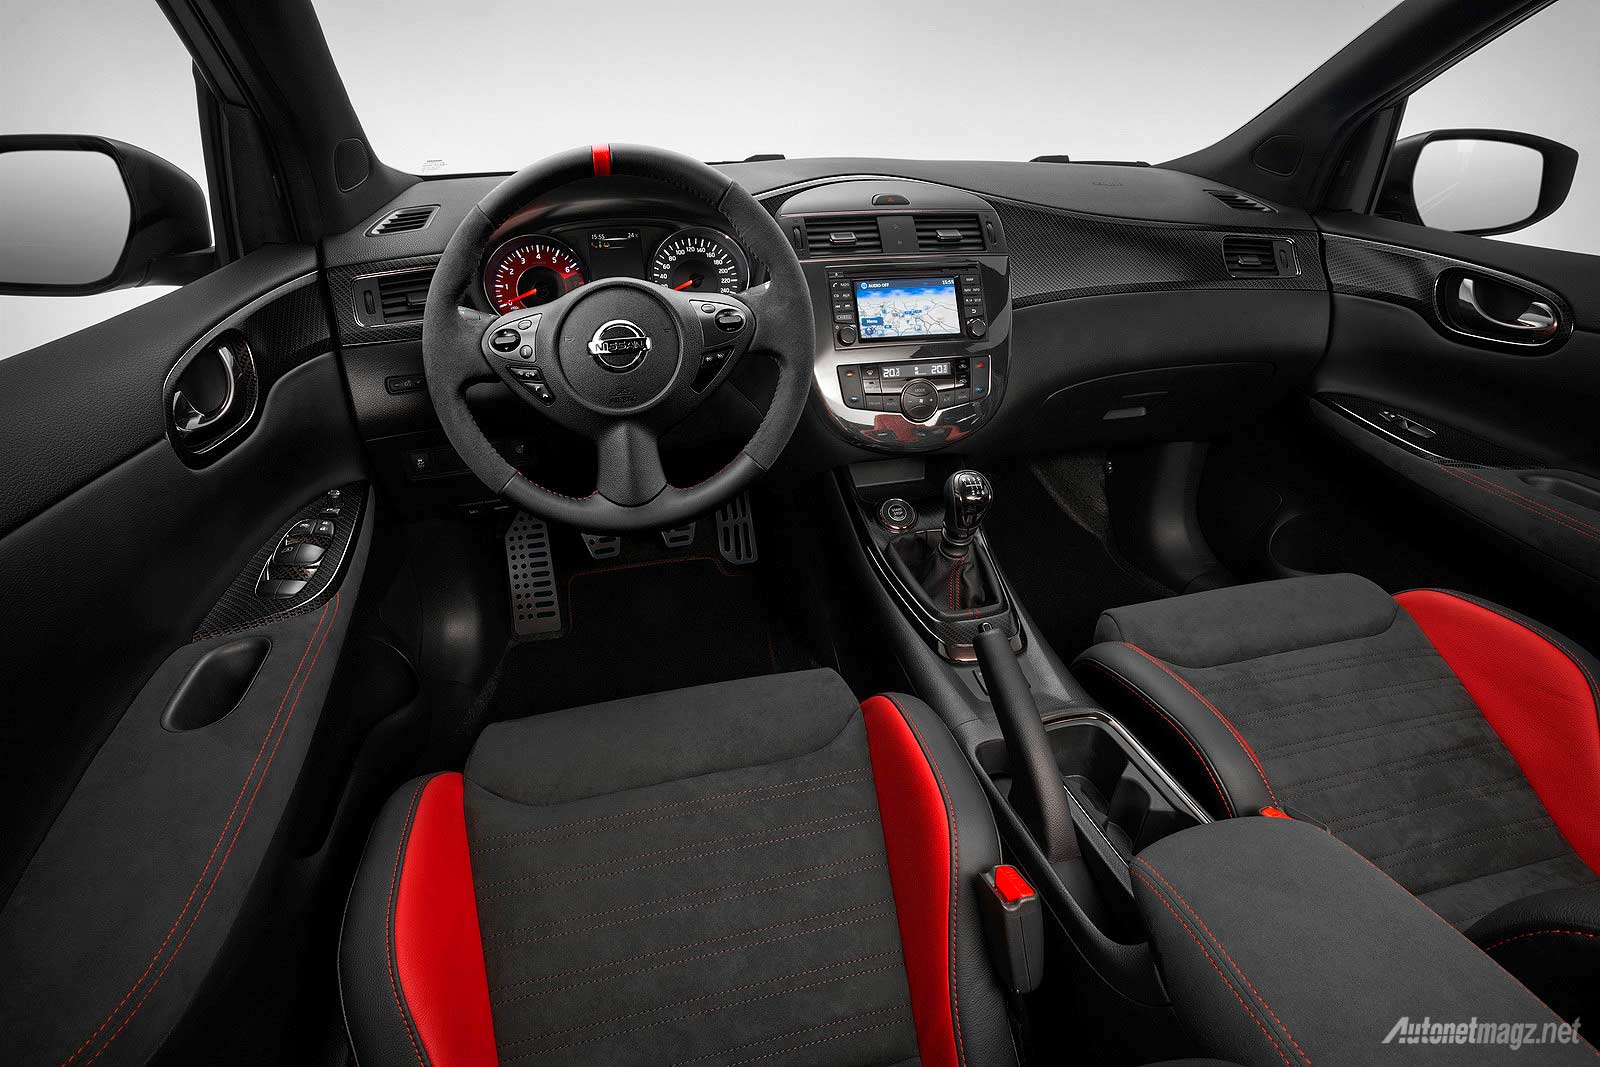 Mobil Konsep, Interior mobil konsep Nissan Pulsar Nismo 2015: Nissan Pulsar Nismo Konsep Hadir di Paris Motor Show 2014